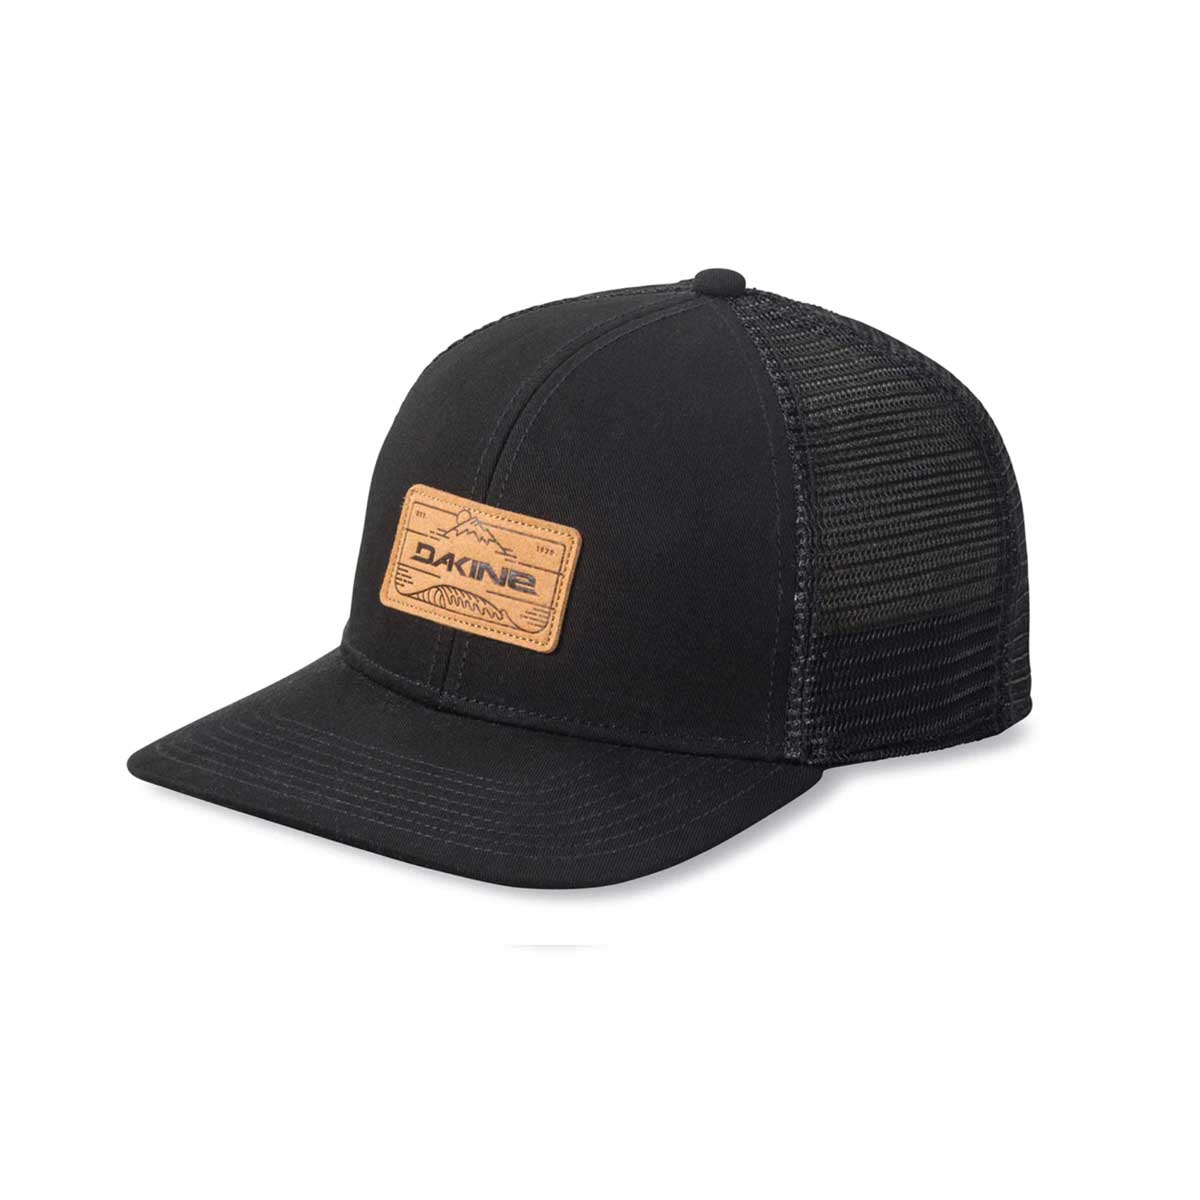 DaKine Peak to Peak Trucker Hat – Black